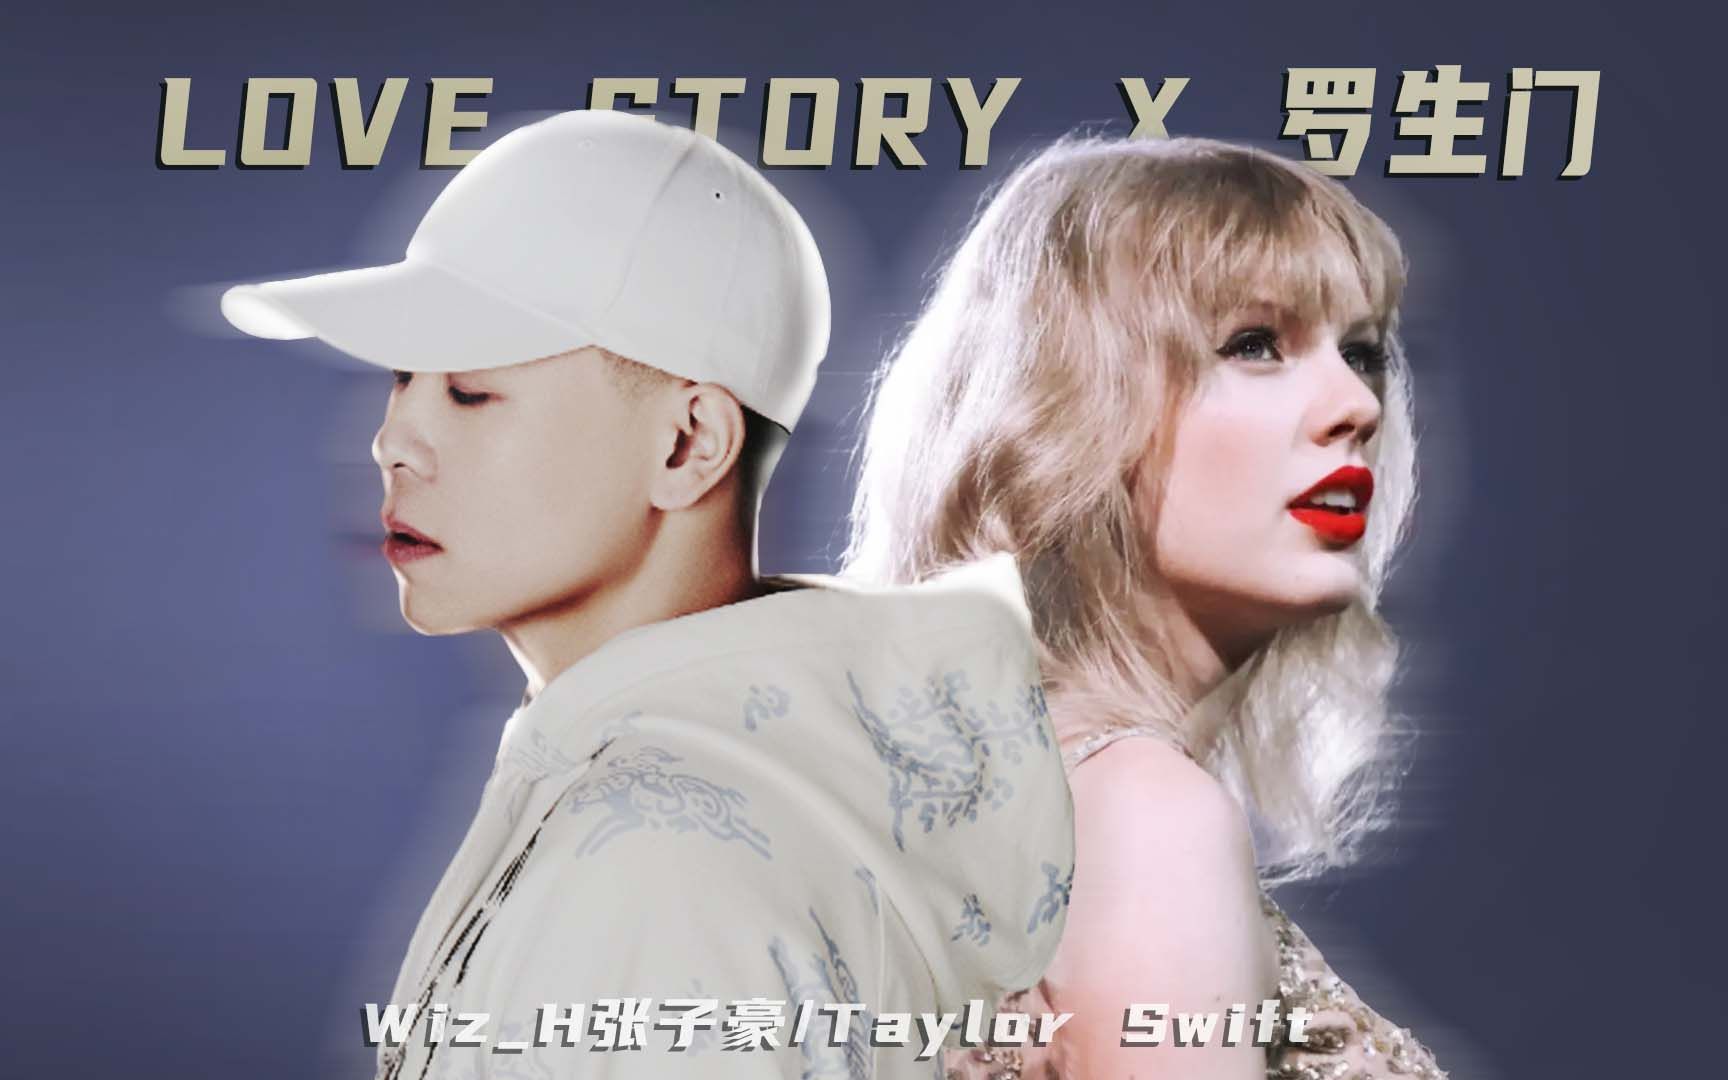 【Taylor Swift/张子豪】Love story x 罗生门 【Mashup】